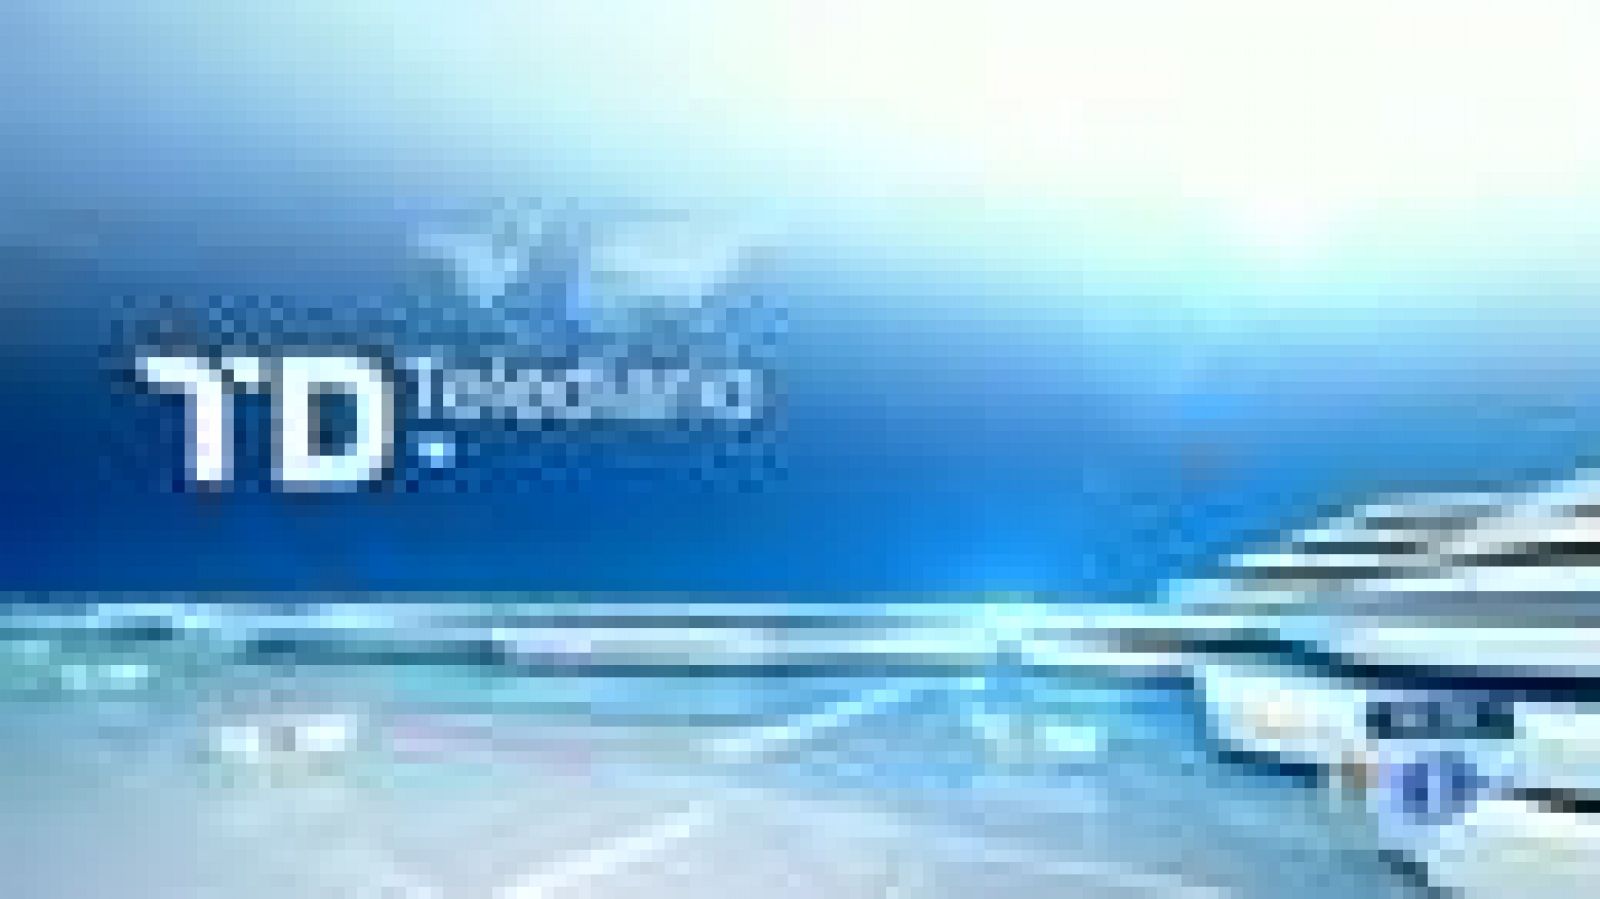 Telediario 1: Telediario Matinal en 4' - 13/09/12 | RTVE Play